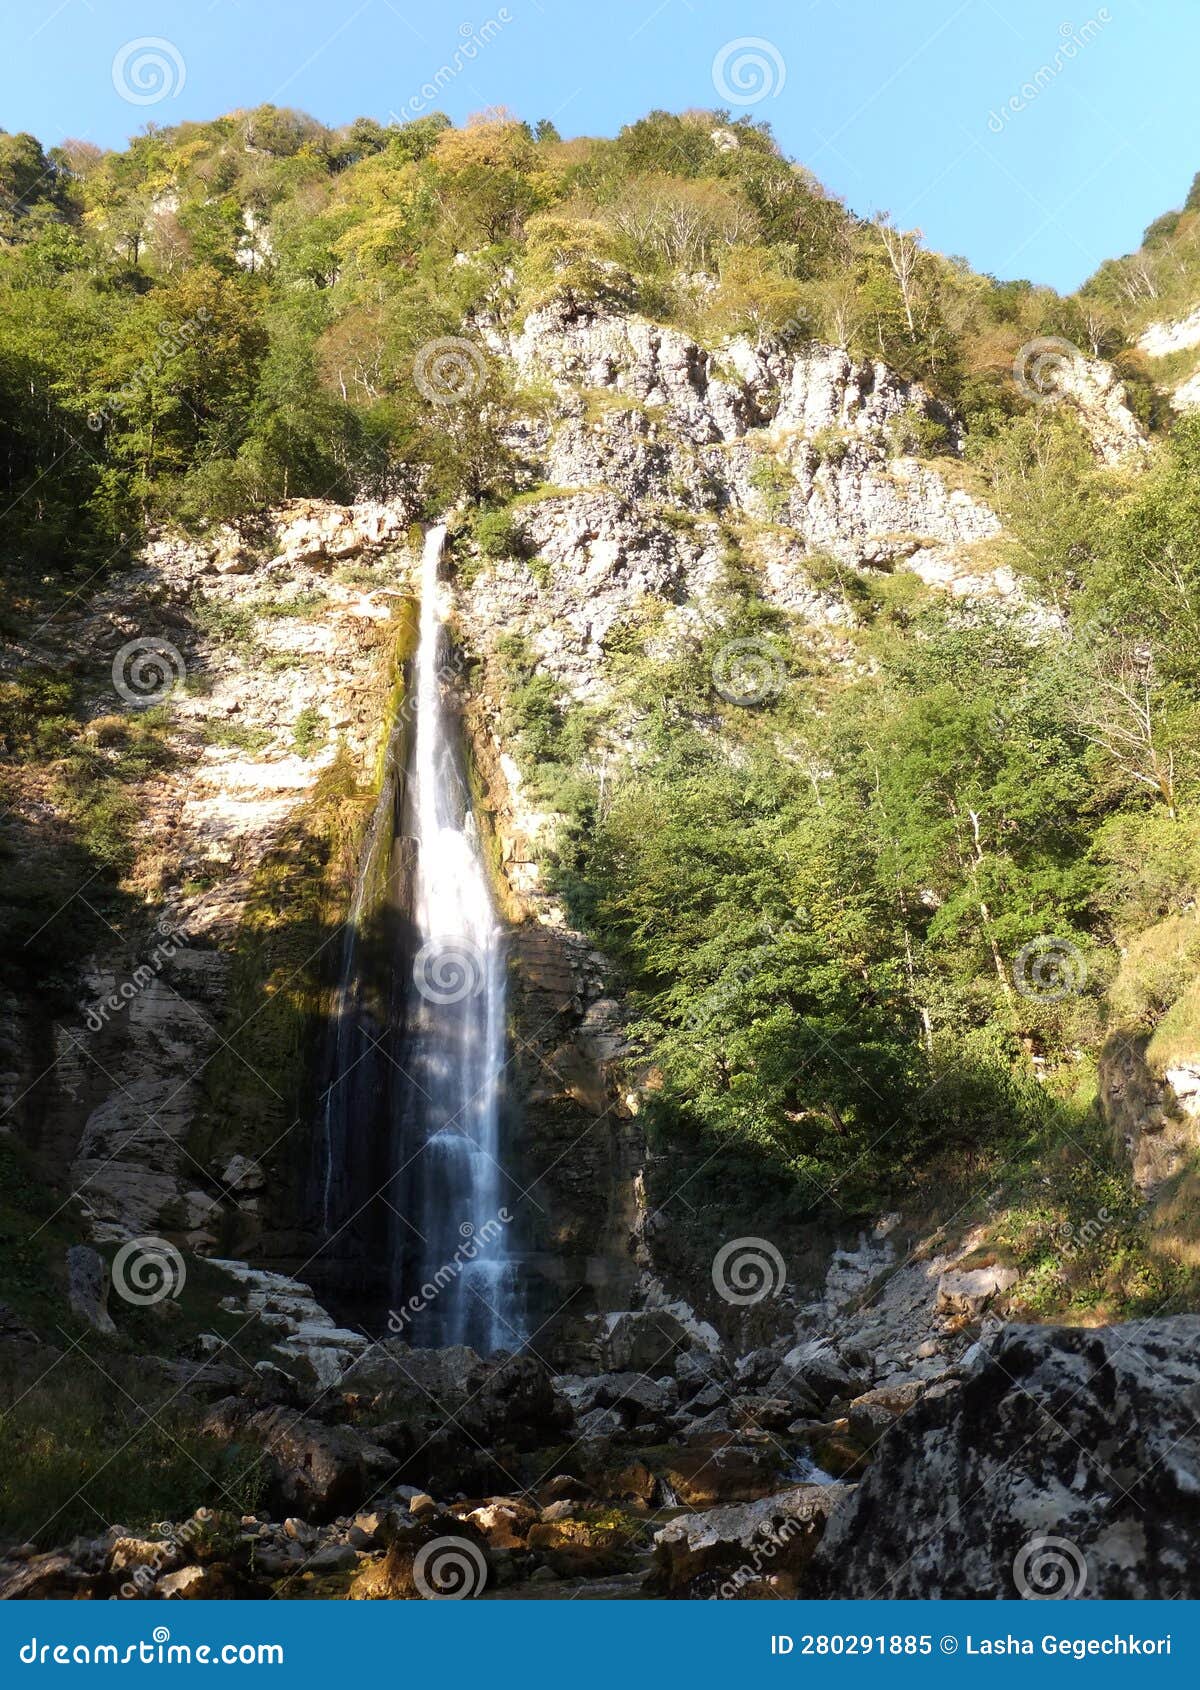 oniore waterfall, 67 meters high. village first balda, national parks of georgia